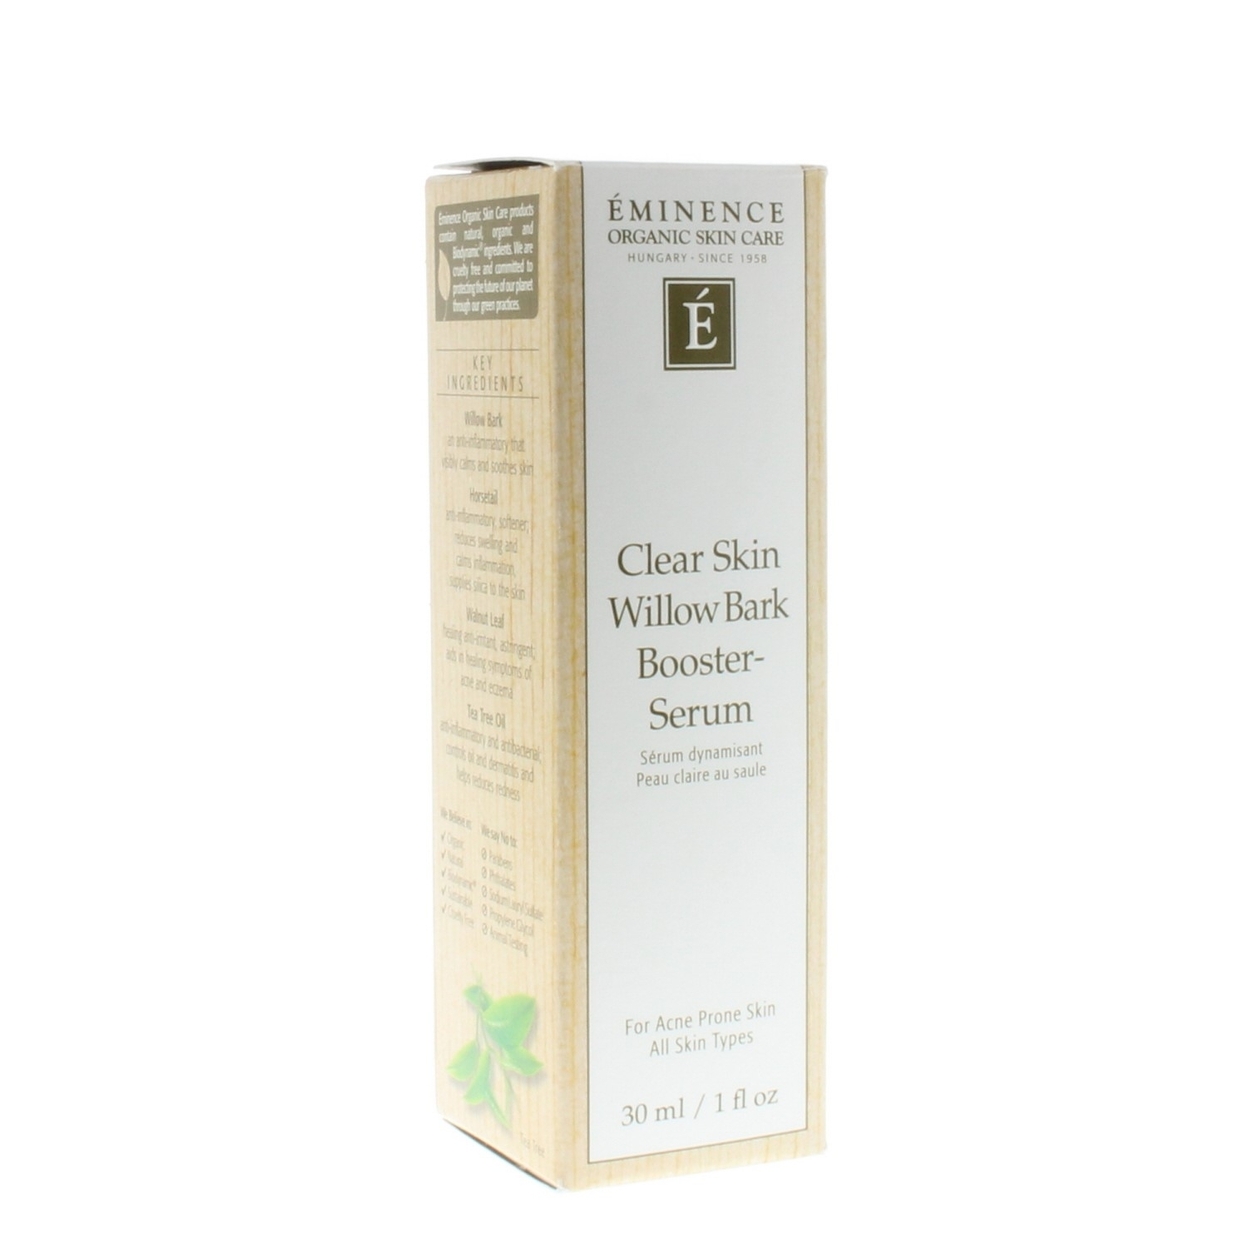 Eminence Clear Skin Willow Bark Booster-Serum 30ml/1oz